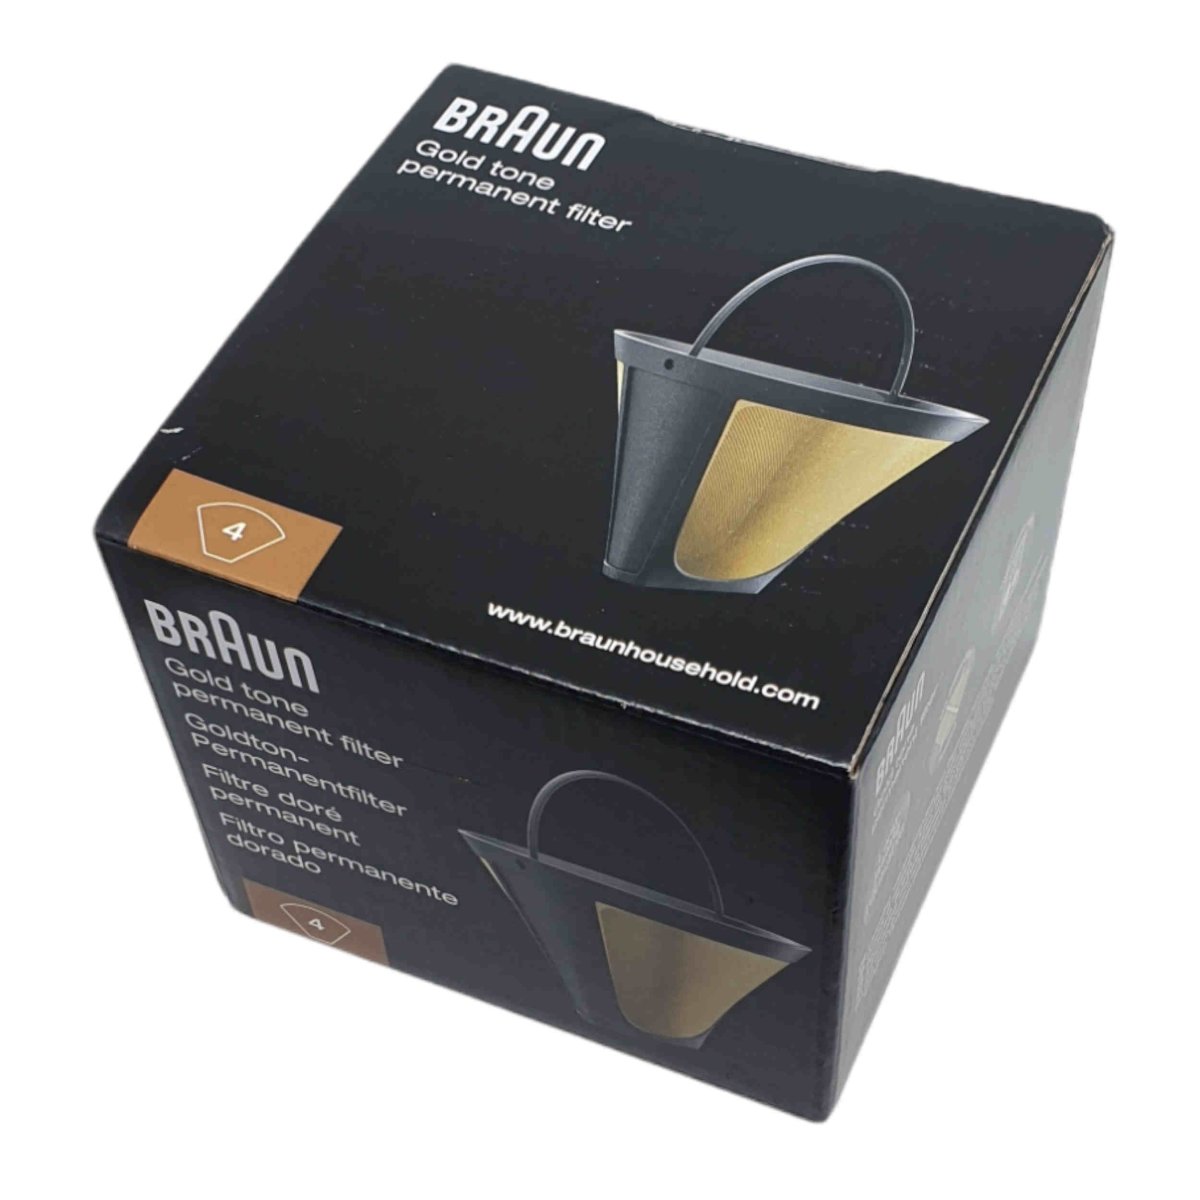 Goldfilter Kaffeeautomat PurAroma 10,99 KF7020 7 / KF7120, Einsatz Braun zu €